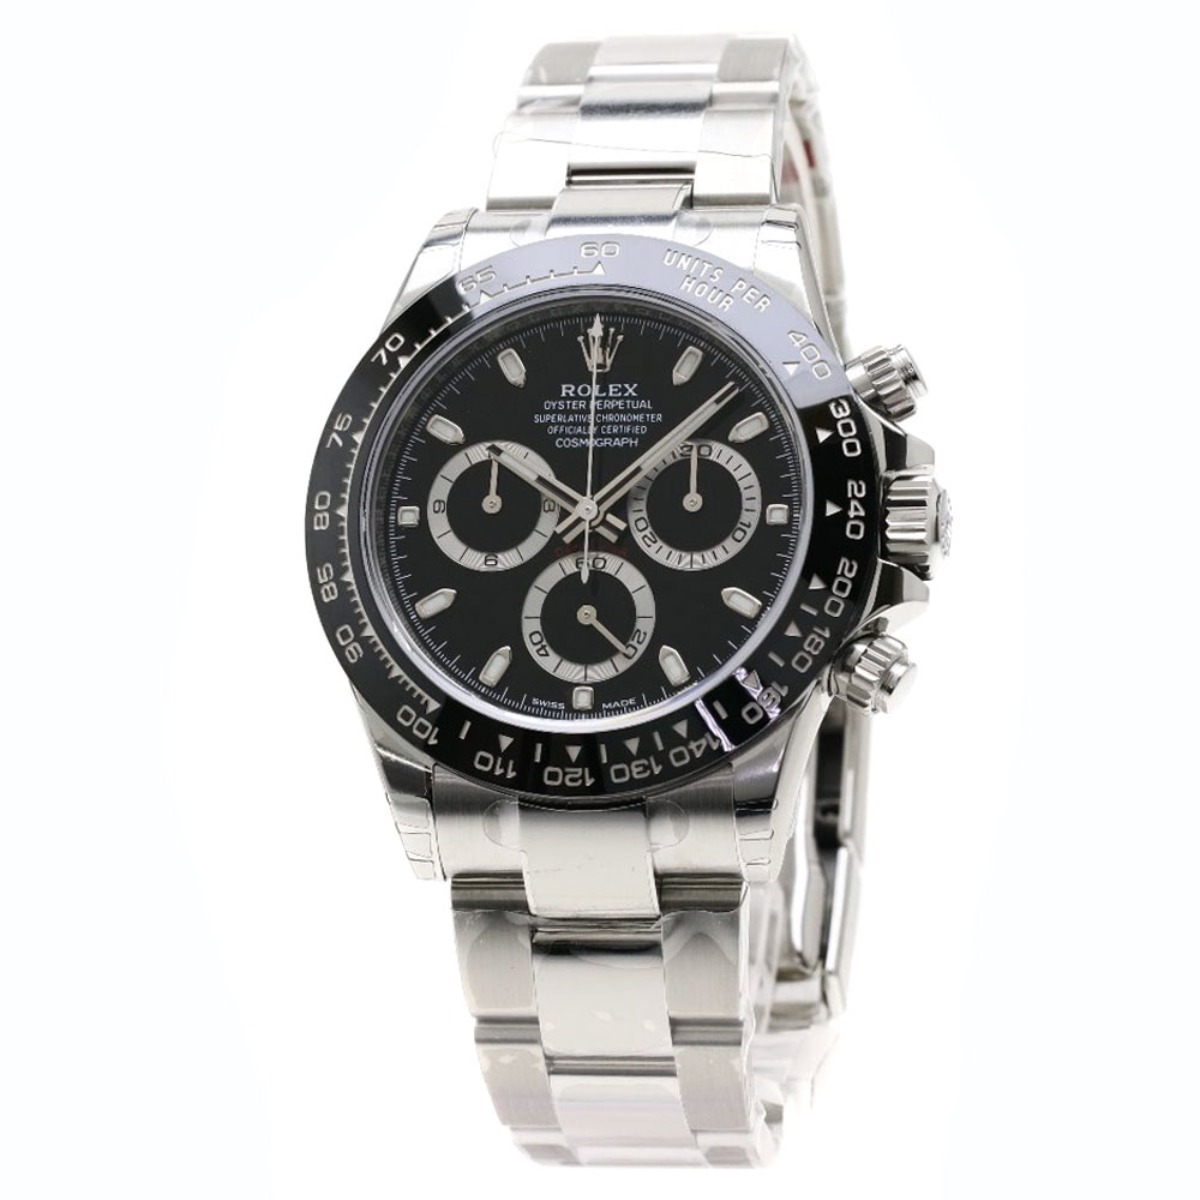 ROLEX 116500LN Cosmograph Daytona Watch 